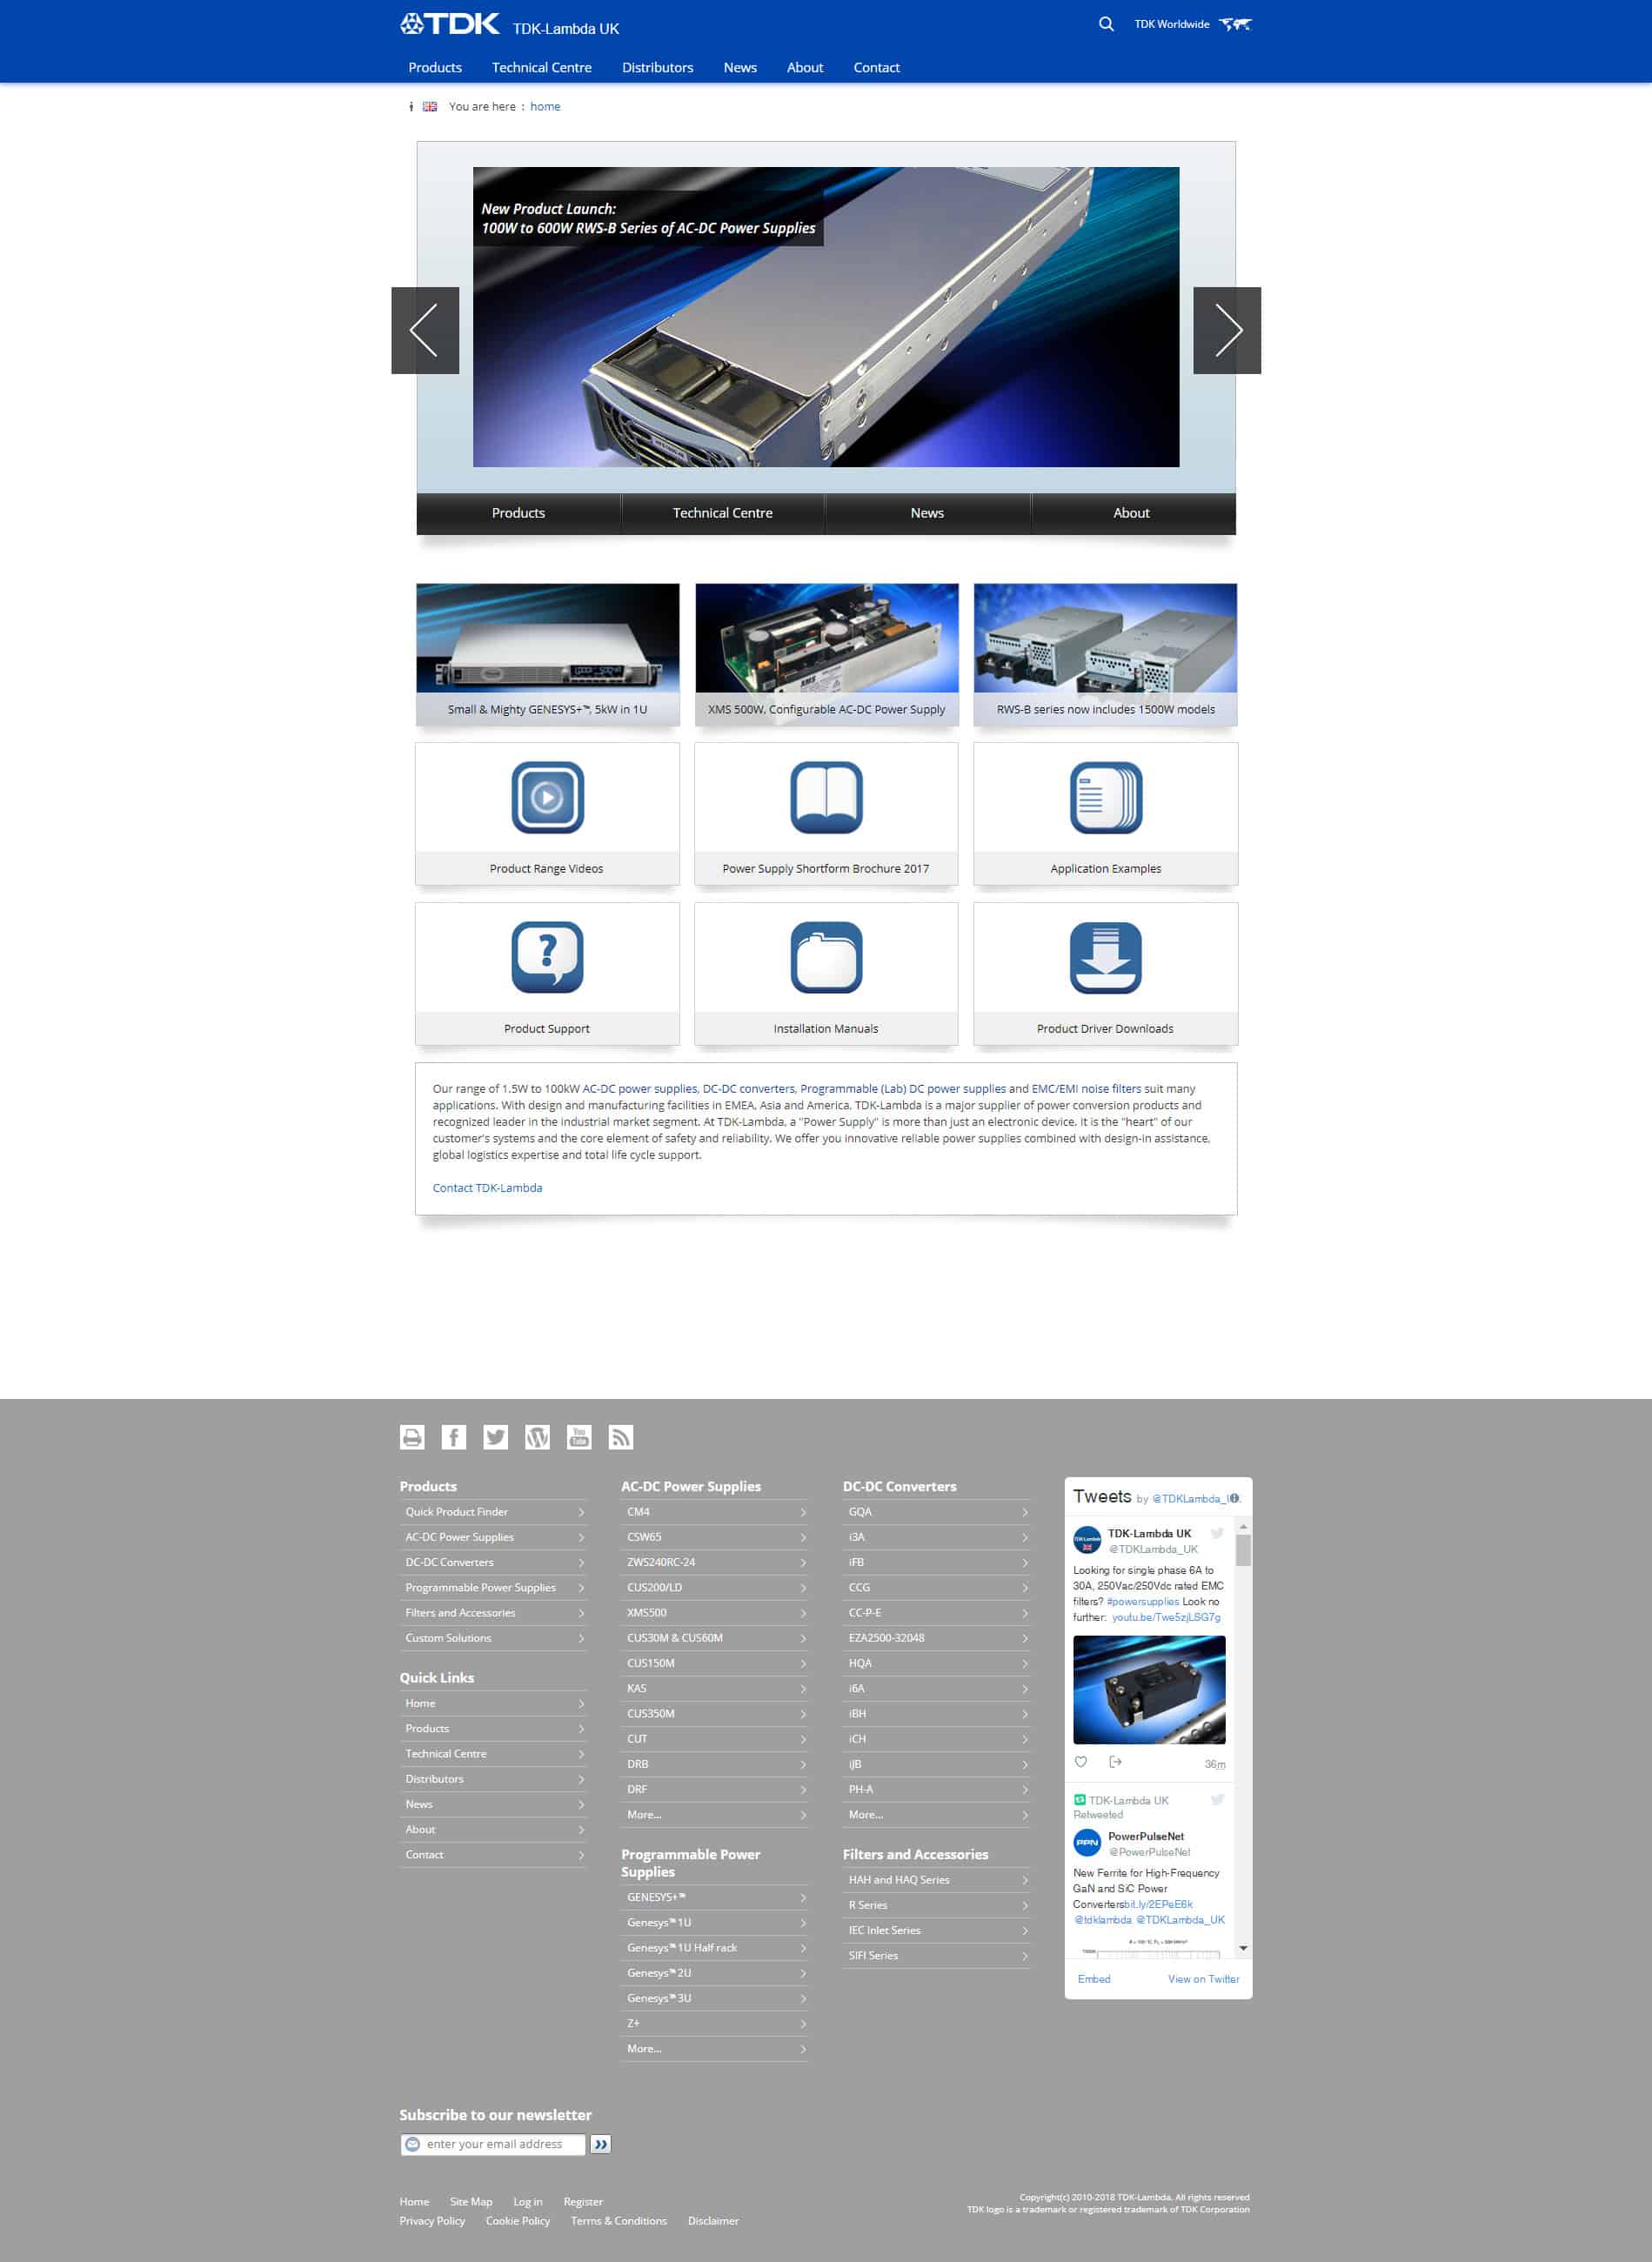 TDK-Lambda homepage screenshot (click to enlarge)